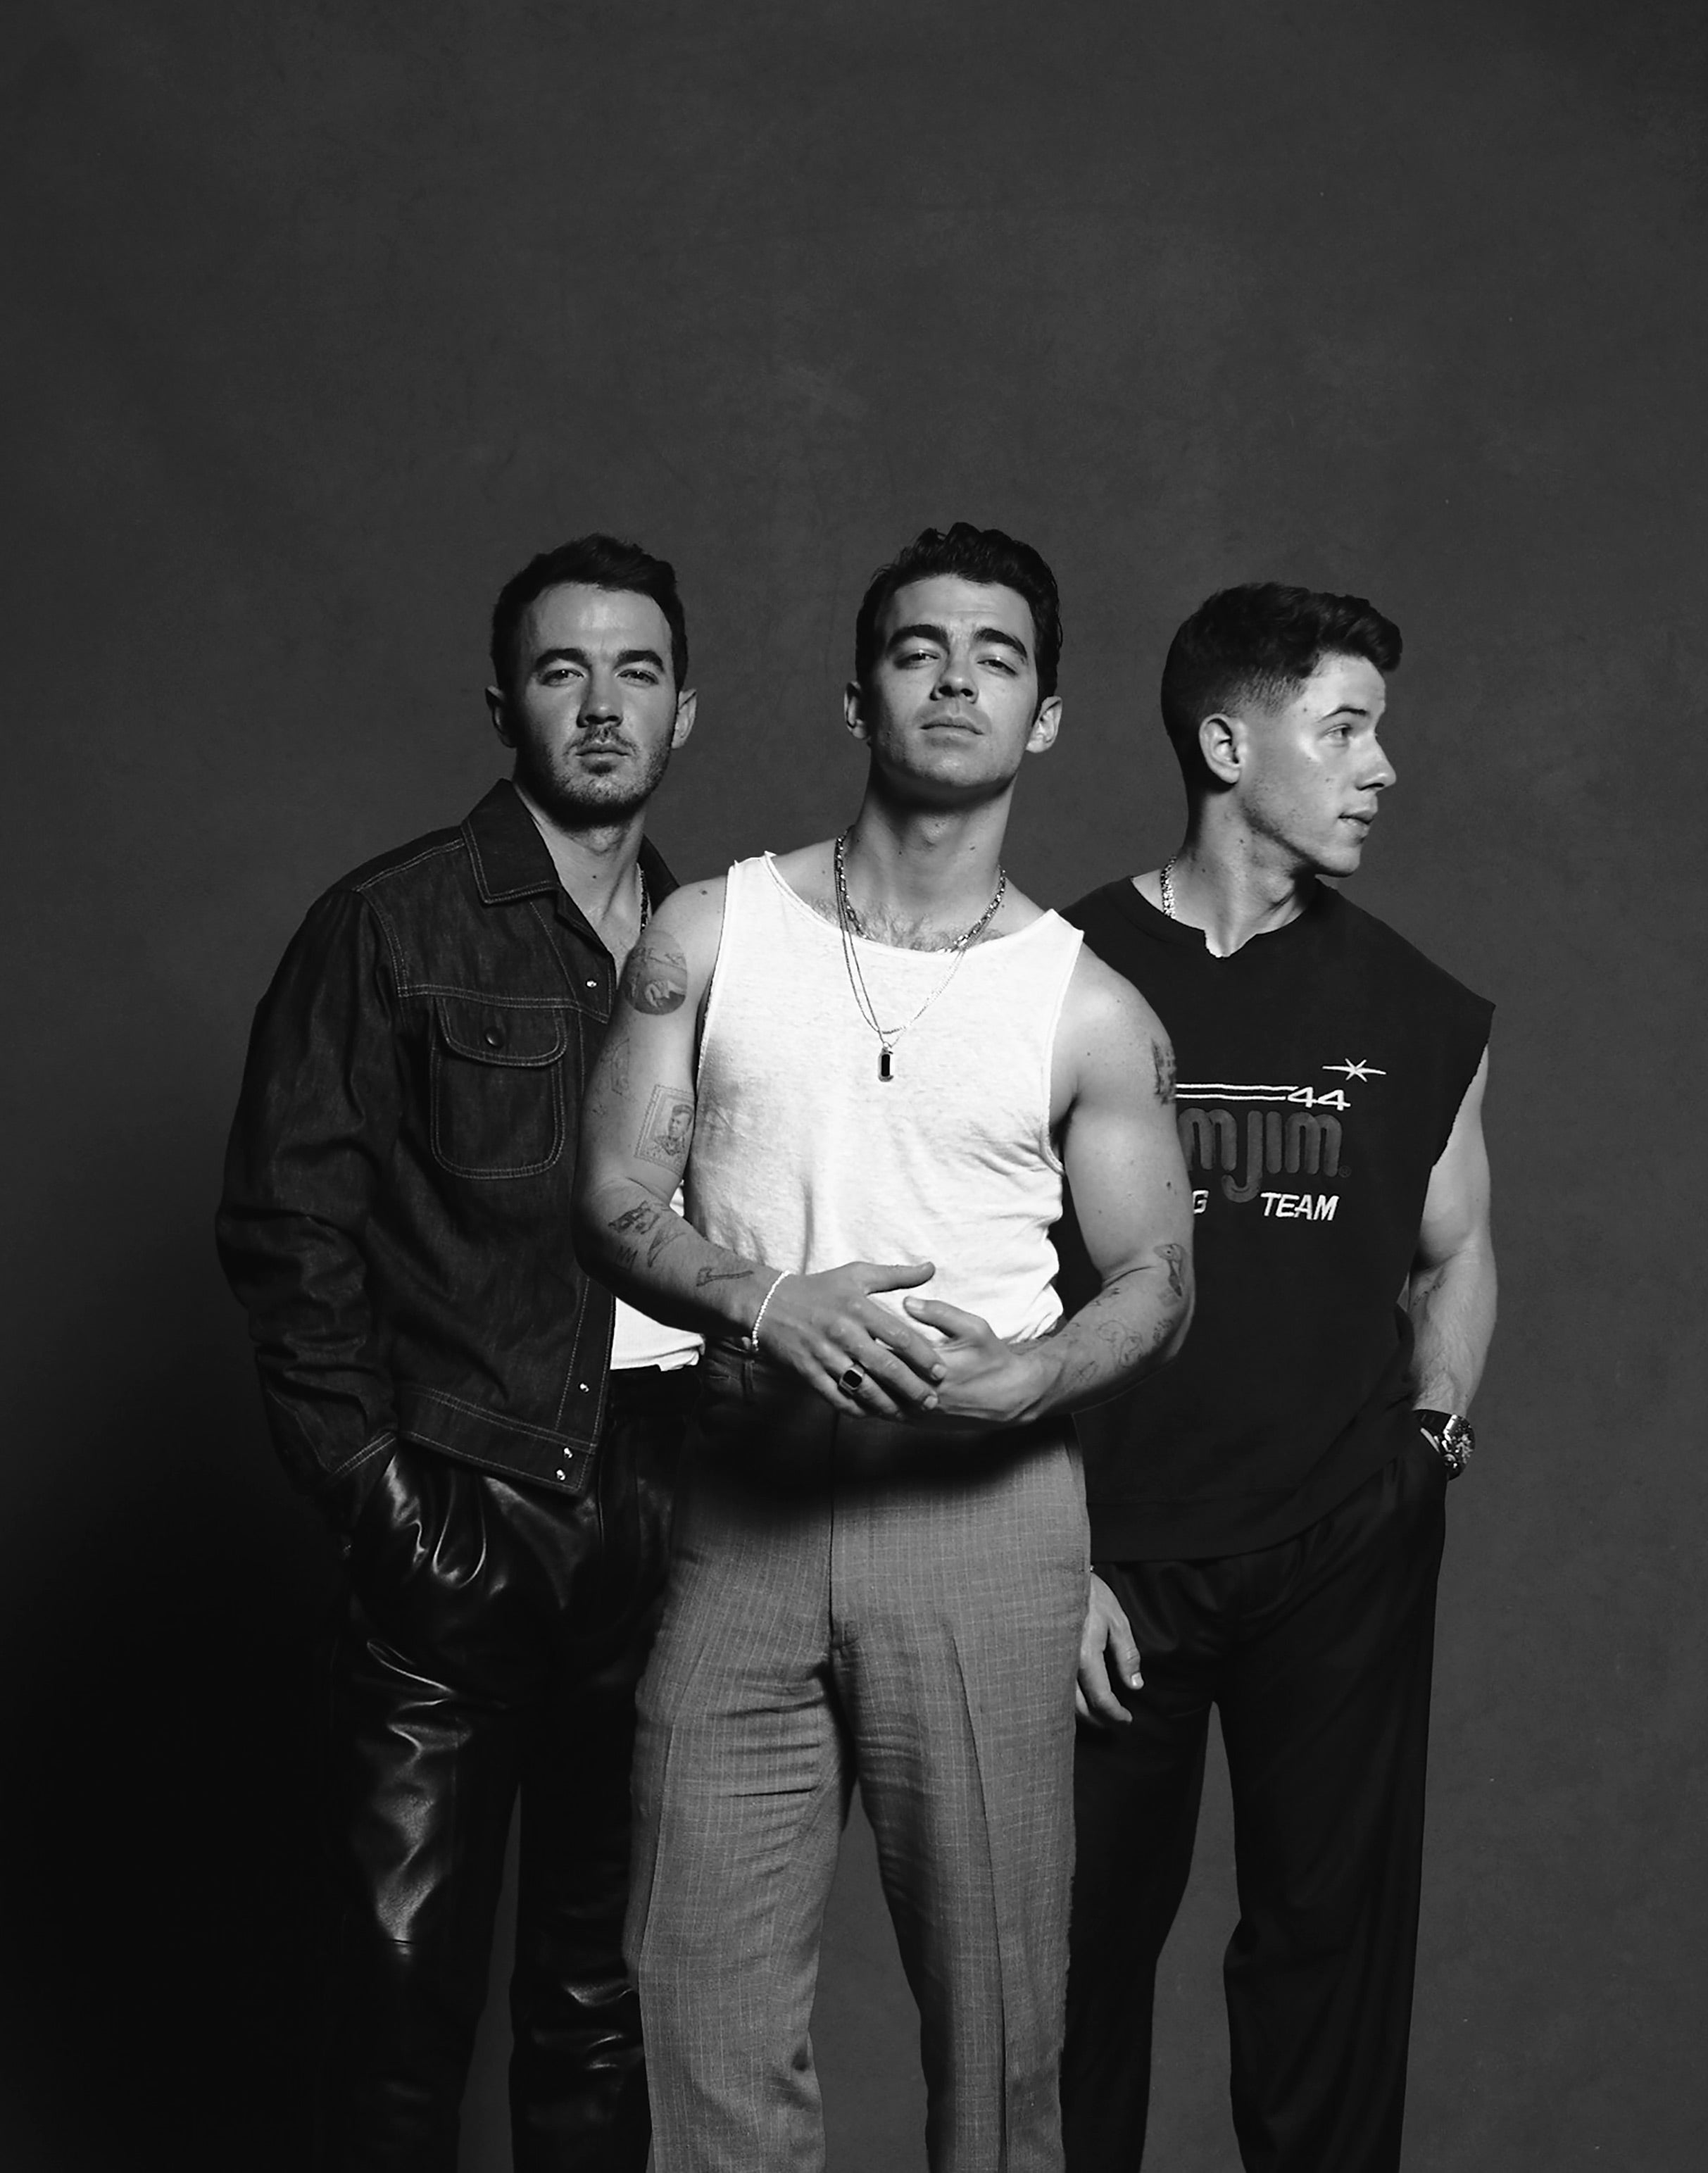 Jonas Brothers - Live in Vegas in Las Vegas promo photo for Artist presale offer code